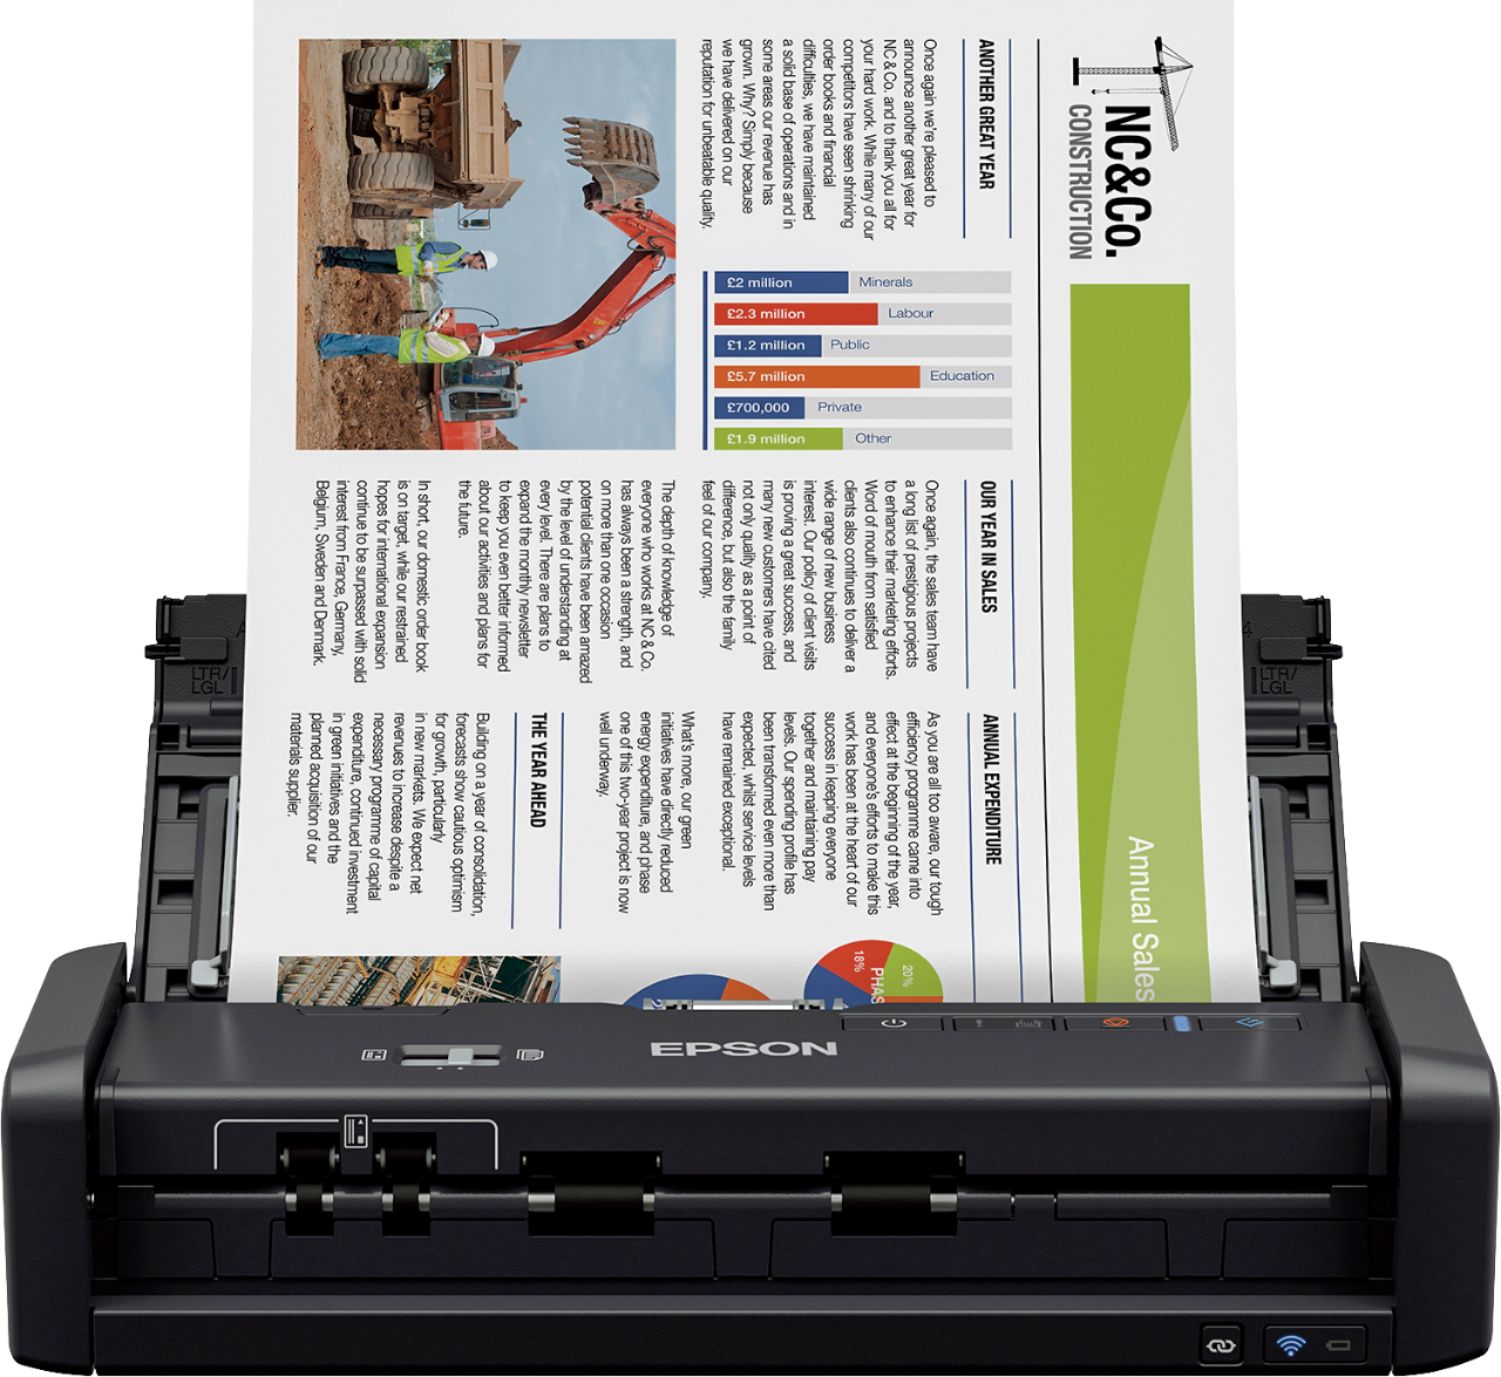 Epson Workforce ES-200 Portable Duplex Document Scanner Review